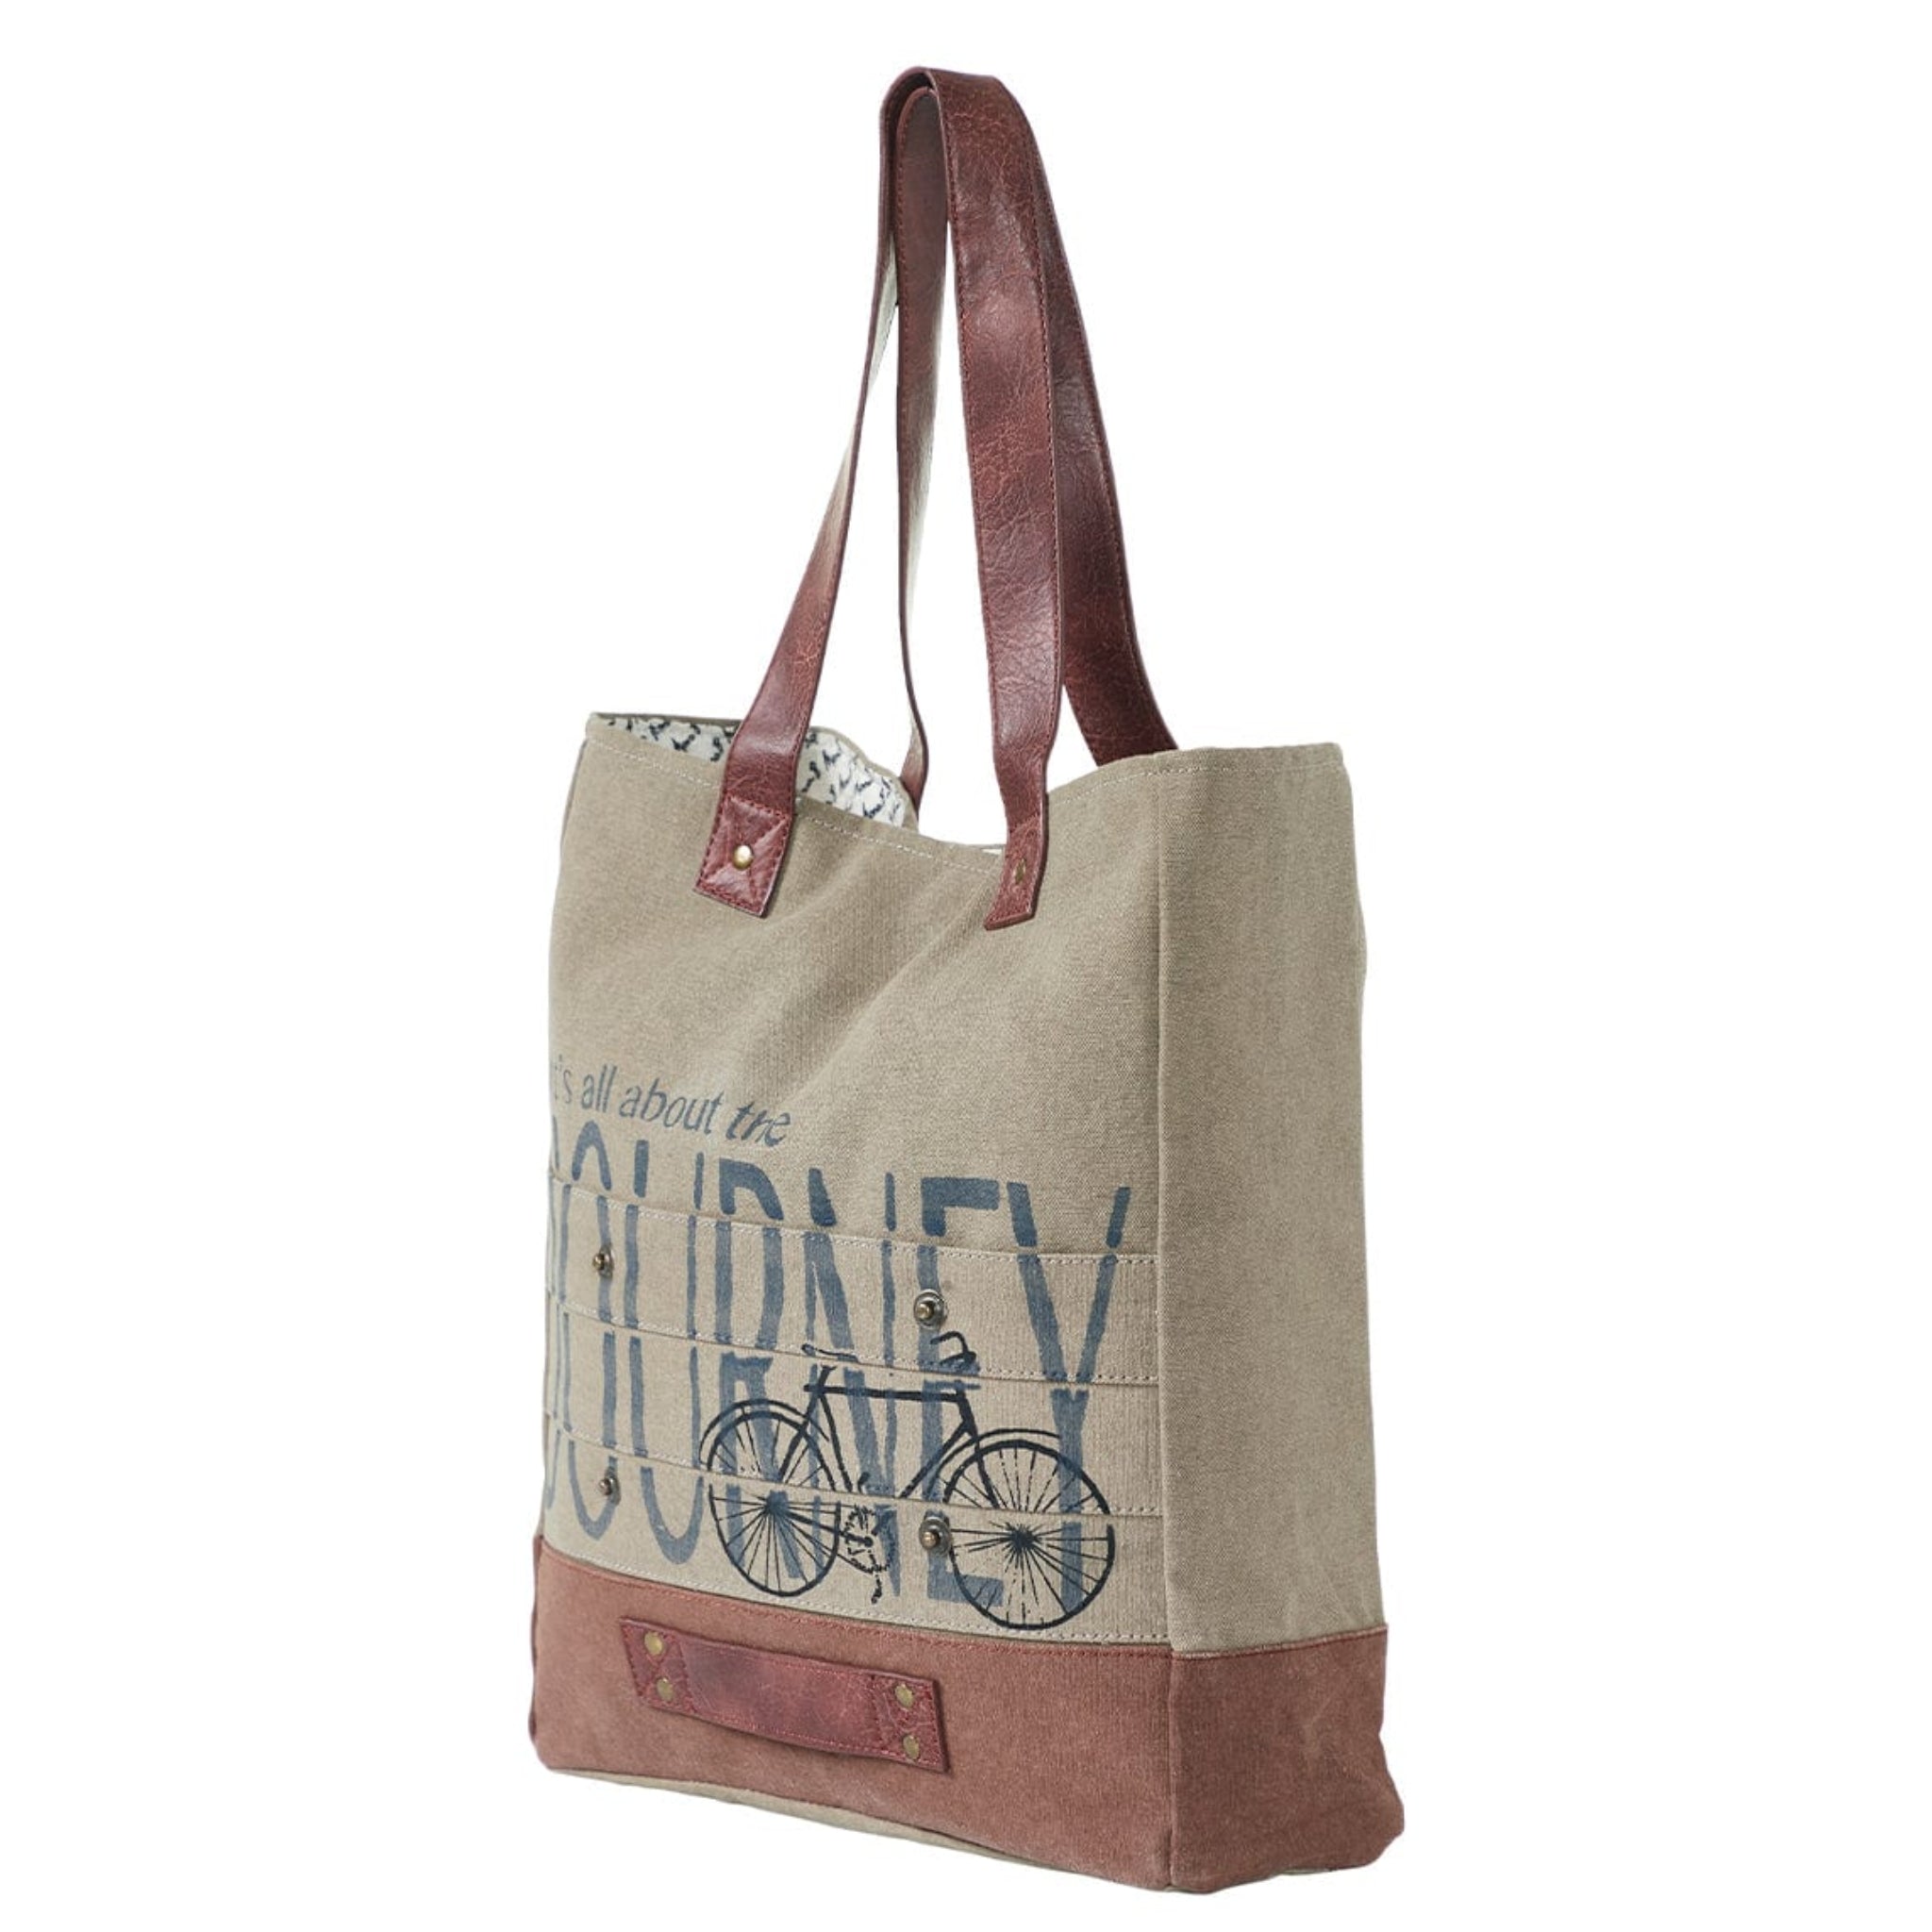 Mona-B Bag Mona B Large Canvas Handbag for Women | Zipper Tote Bag for Grocery, Shopping, Travel | Stylish Vintage Shoulder Bags for Women (Beige) - M-3702